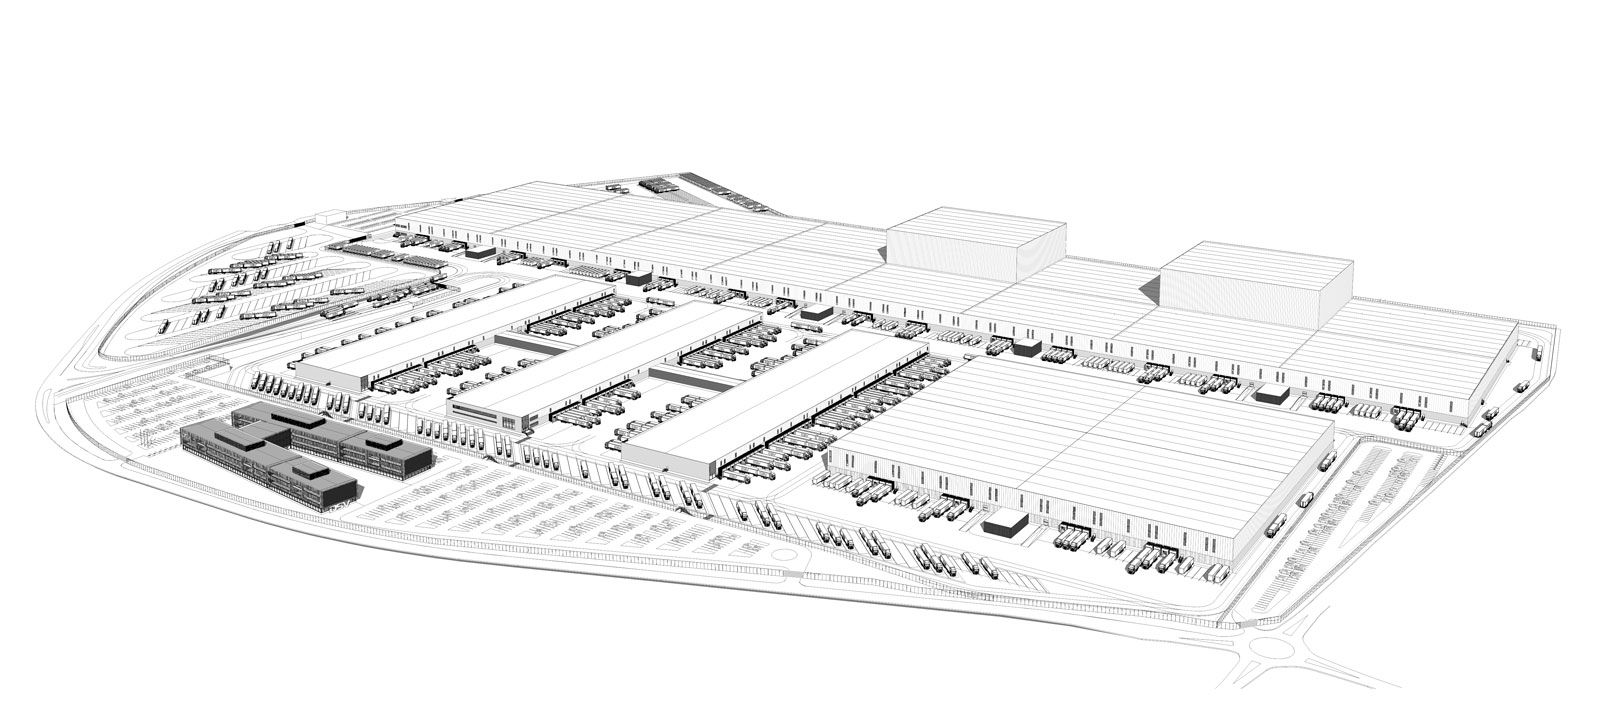 ak83 arkitekter design Europe's largest logistics center for DSV